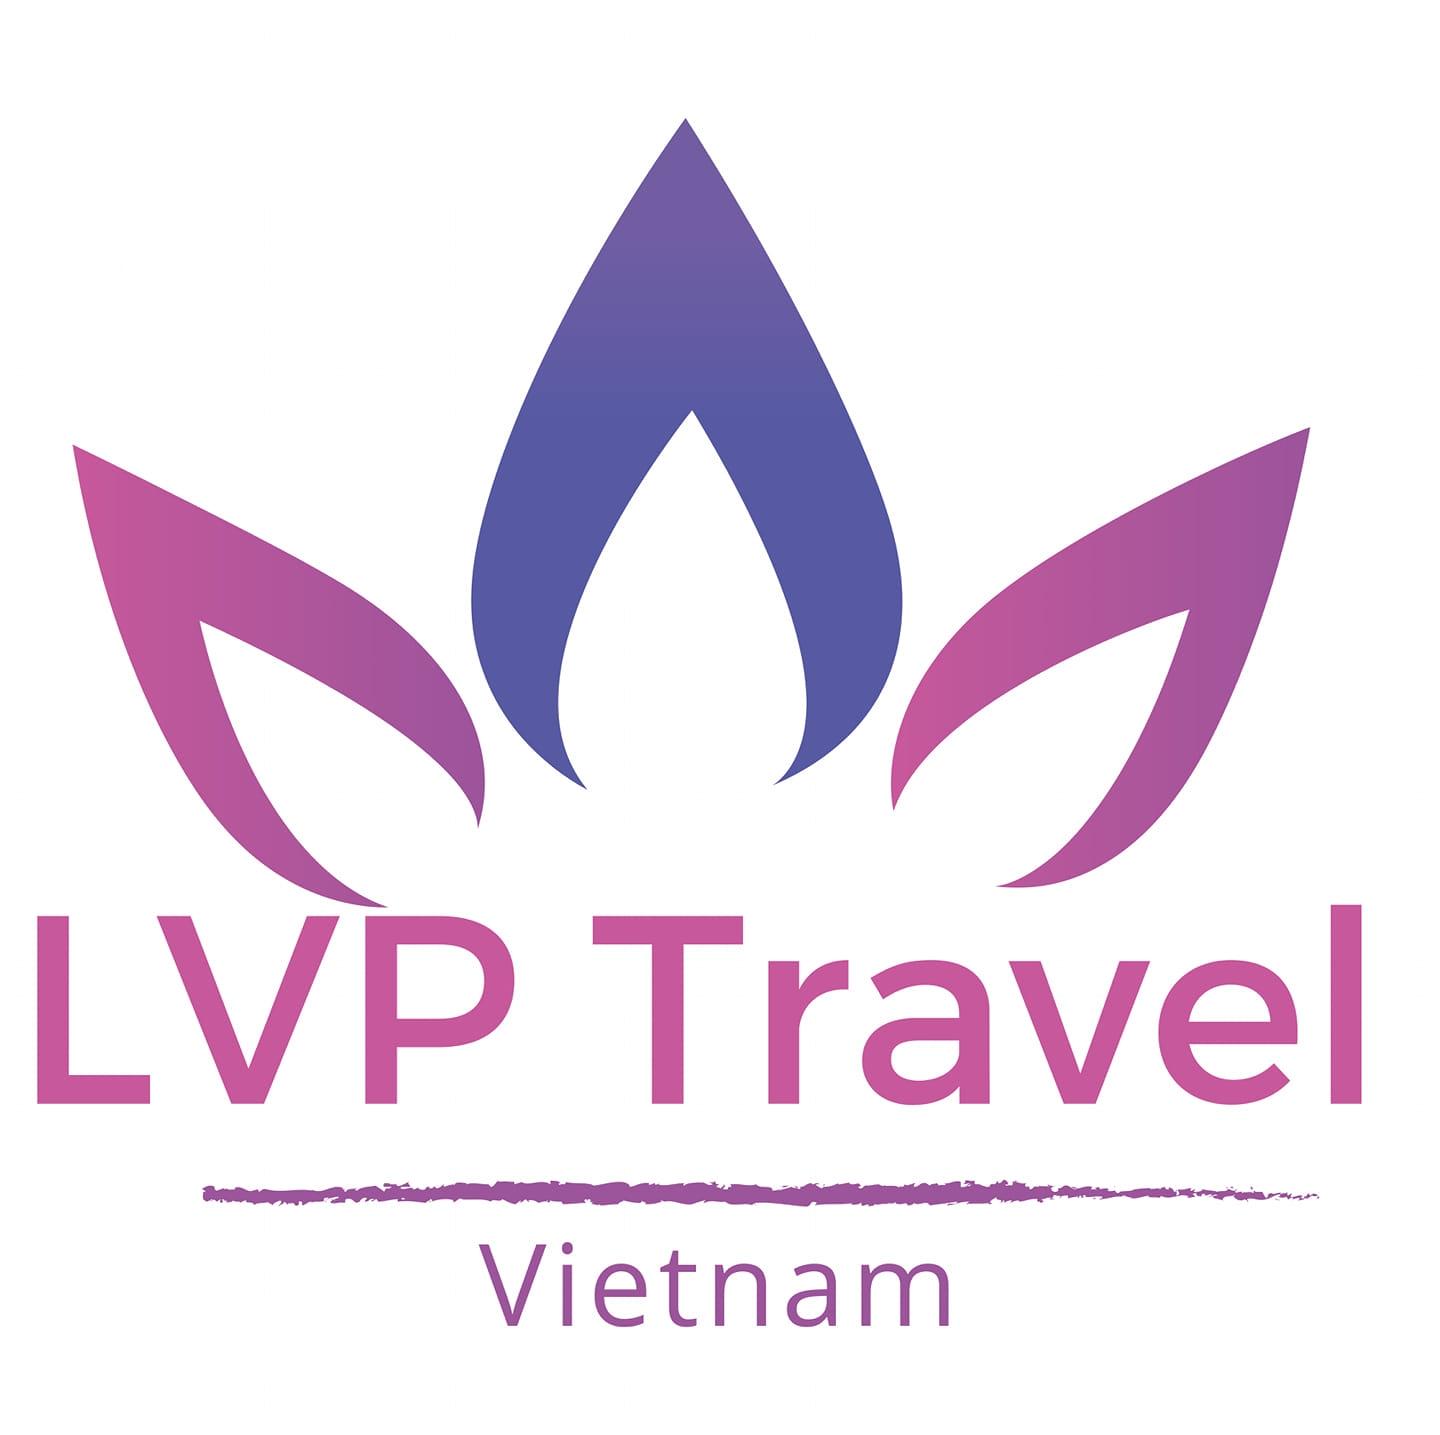 LVP Travel